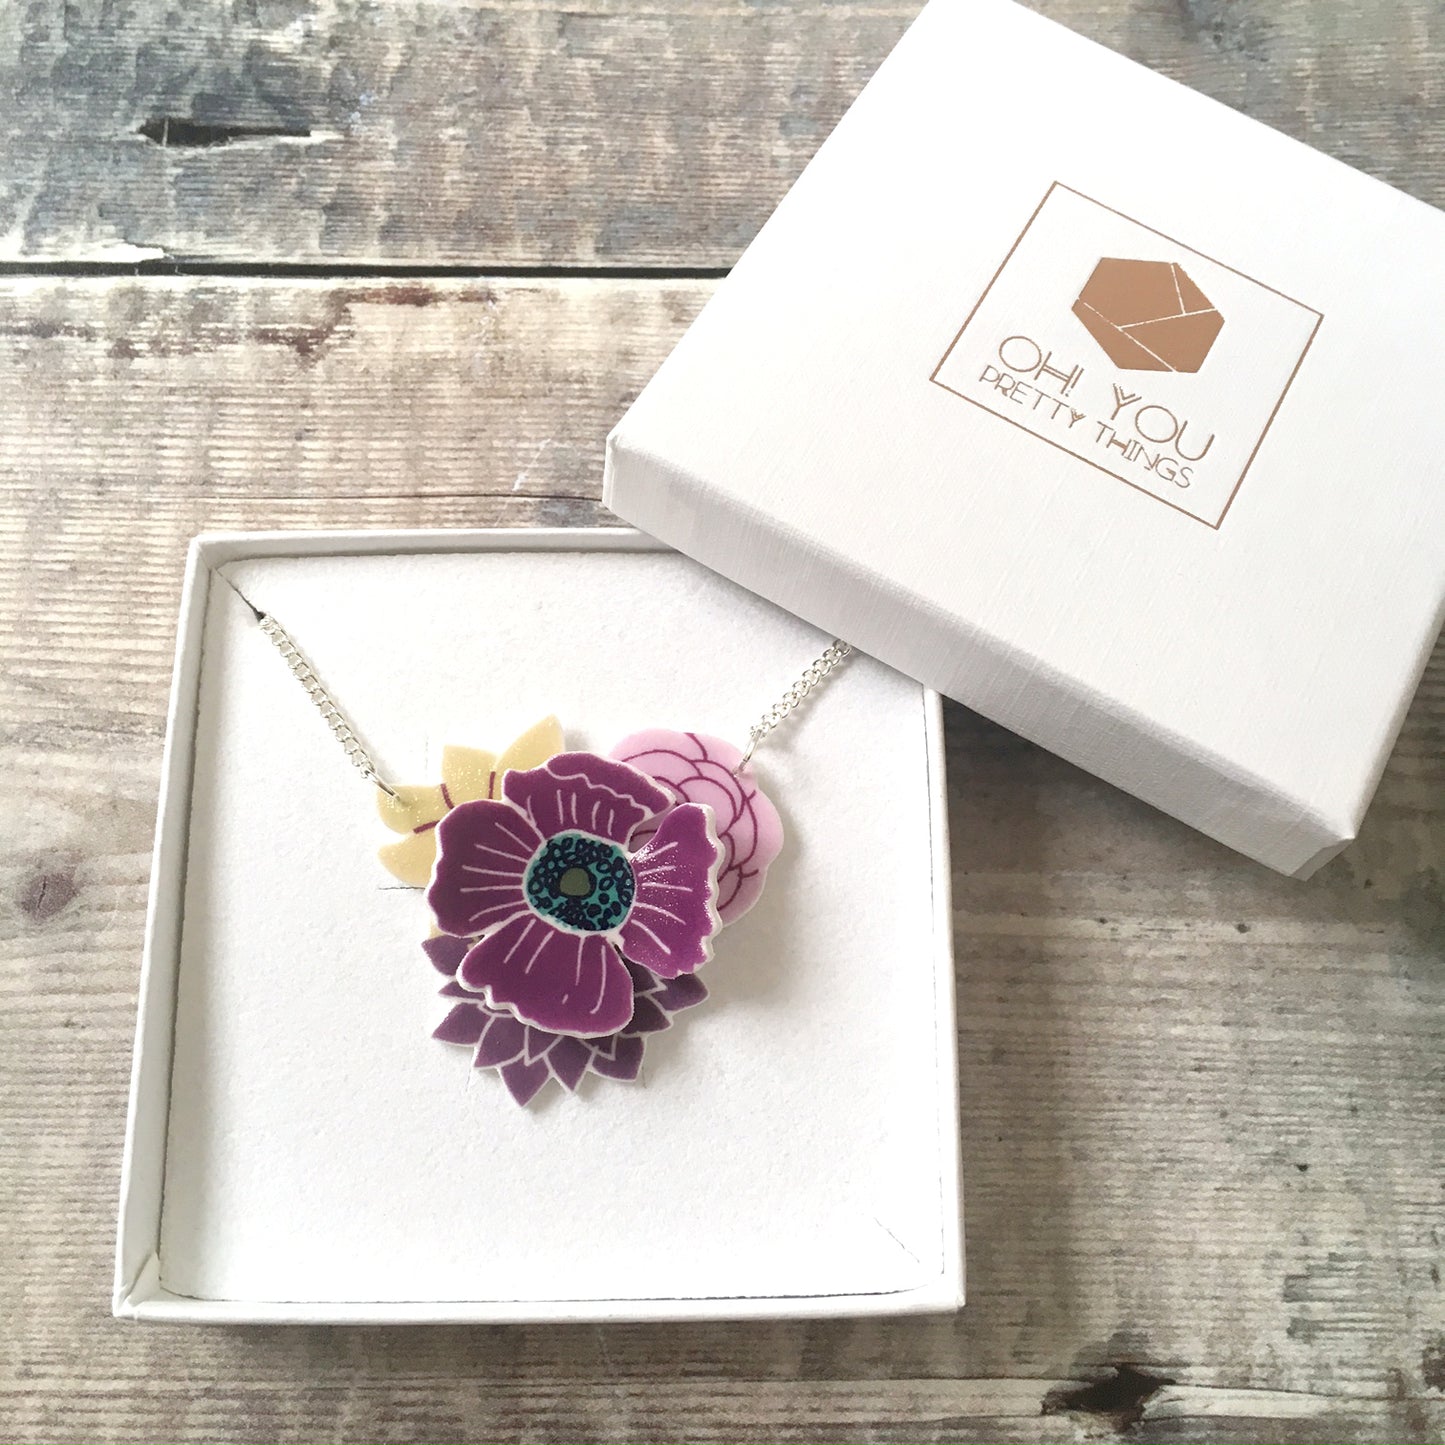 Purple layered flower 3D pendant necklace